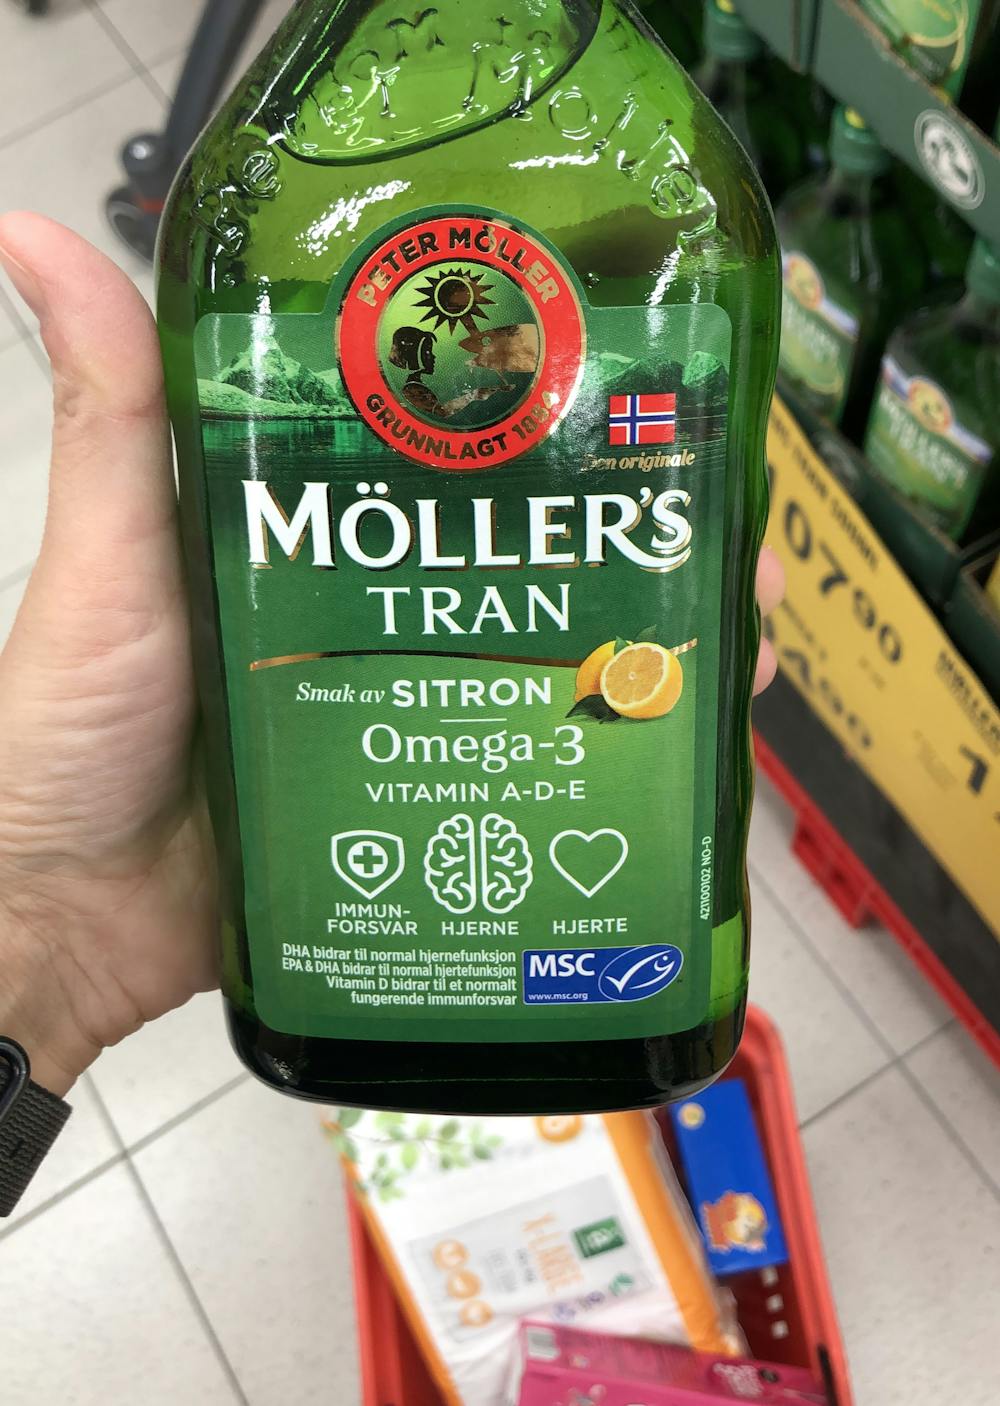 Möllers tran smak av sitron, Möllers